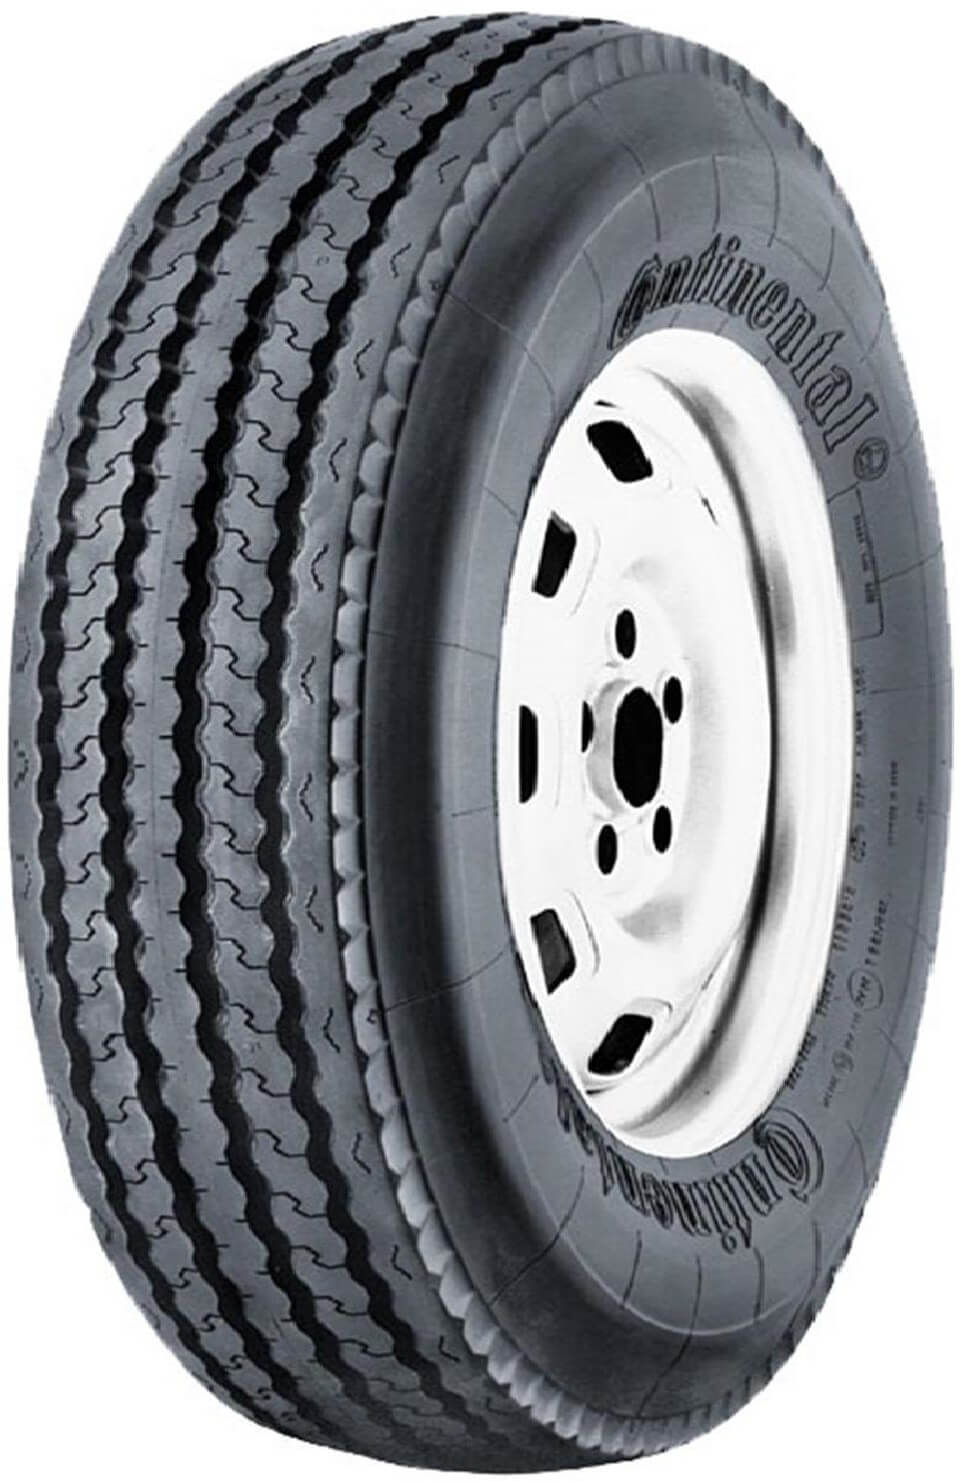 product_type-heavy_tires CONTINENTAL LSR+ EU LRF 12PR TT 7 R16 117L